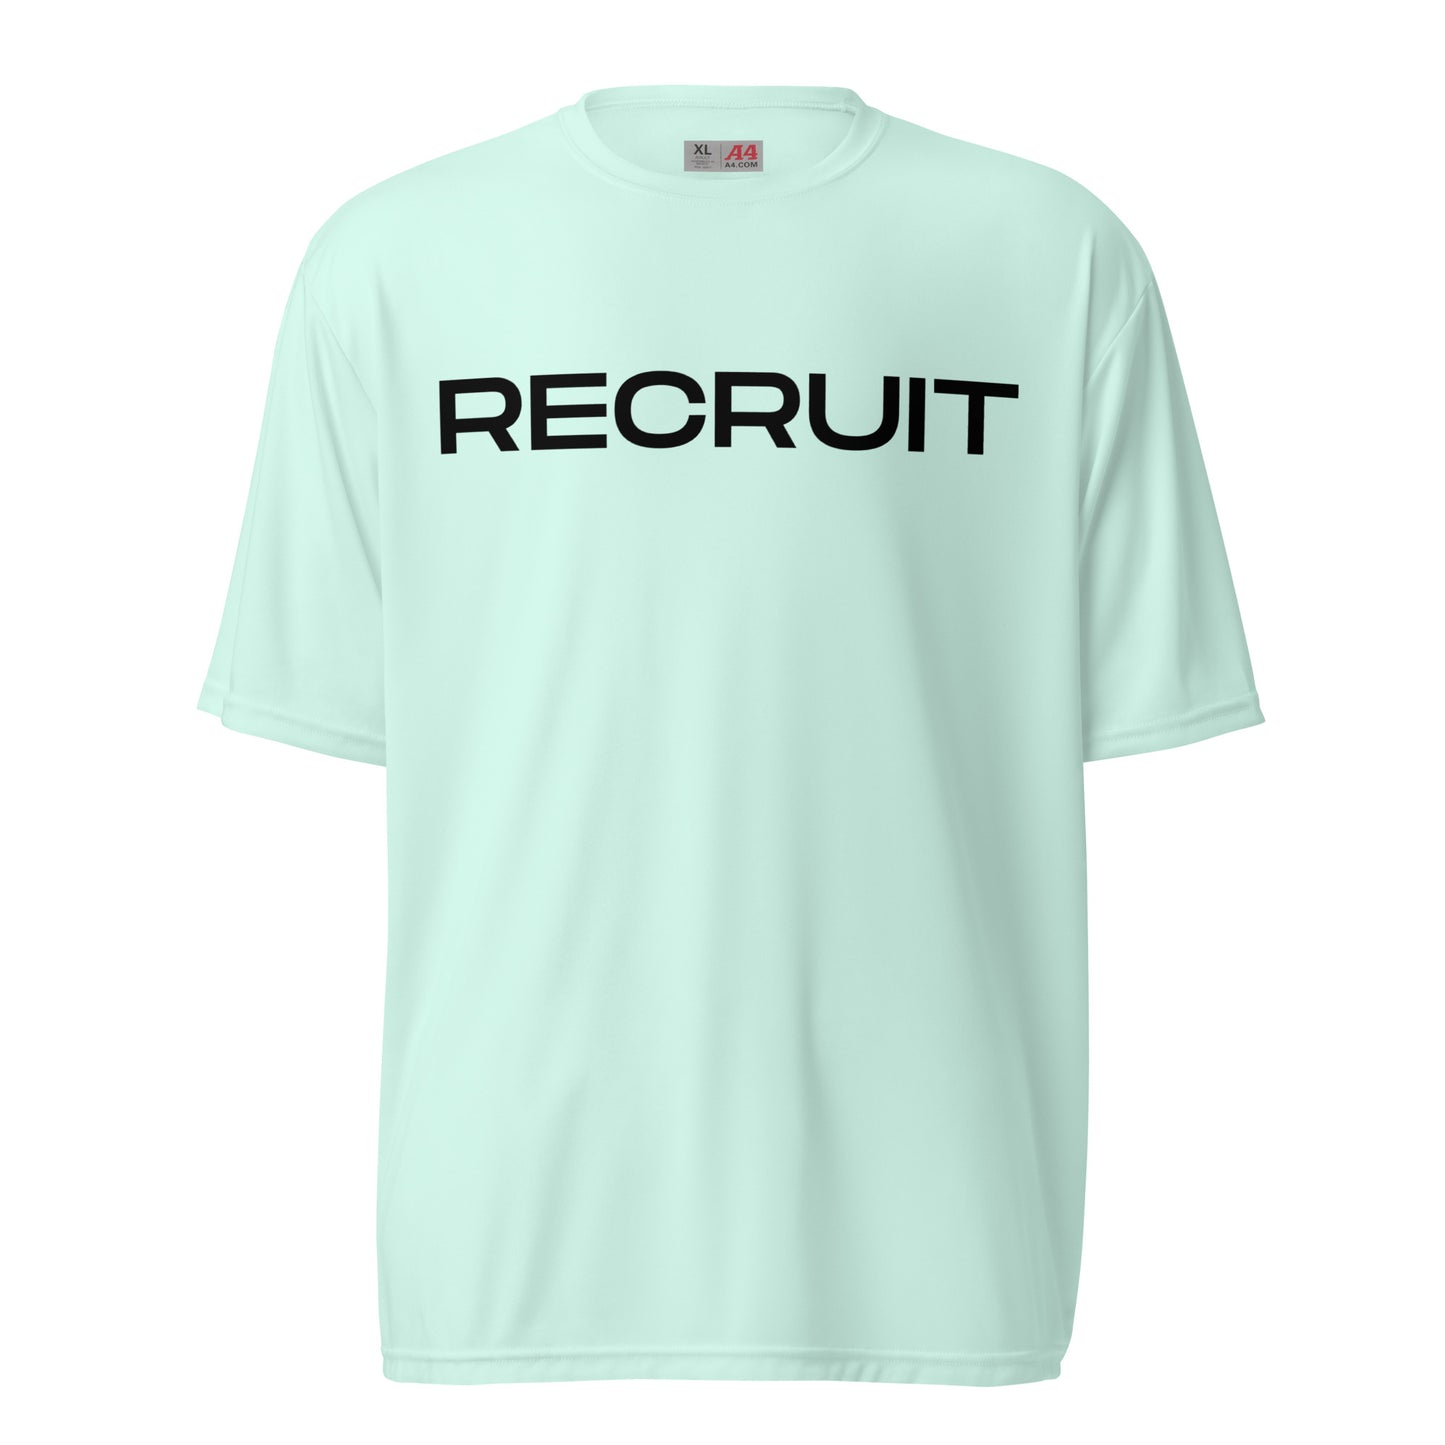 2030 Setter Recruit - Unisex performance crew neck t-shirt